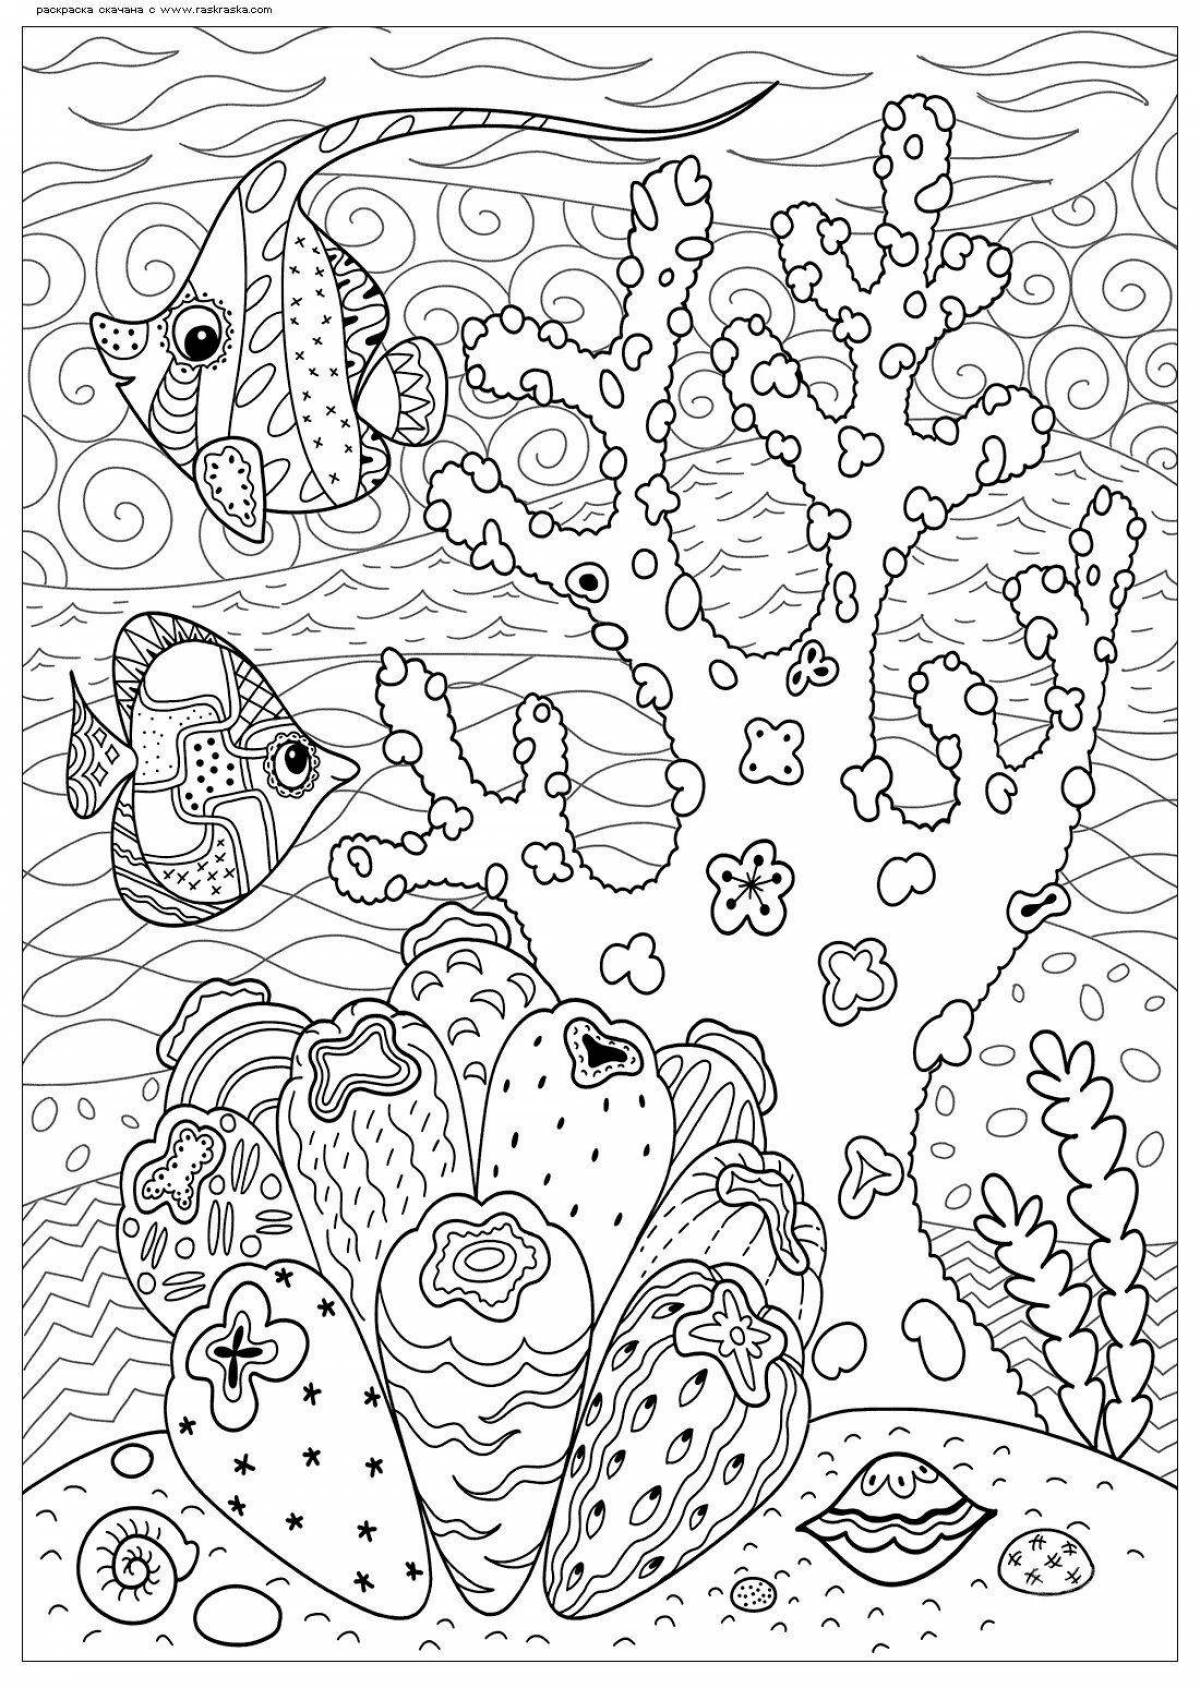 Bright anti-stress marine life coloring book